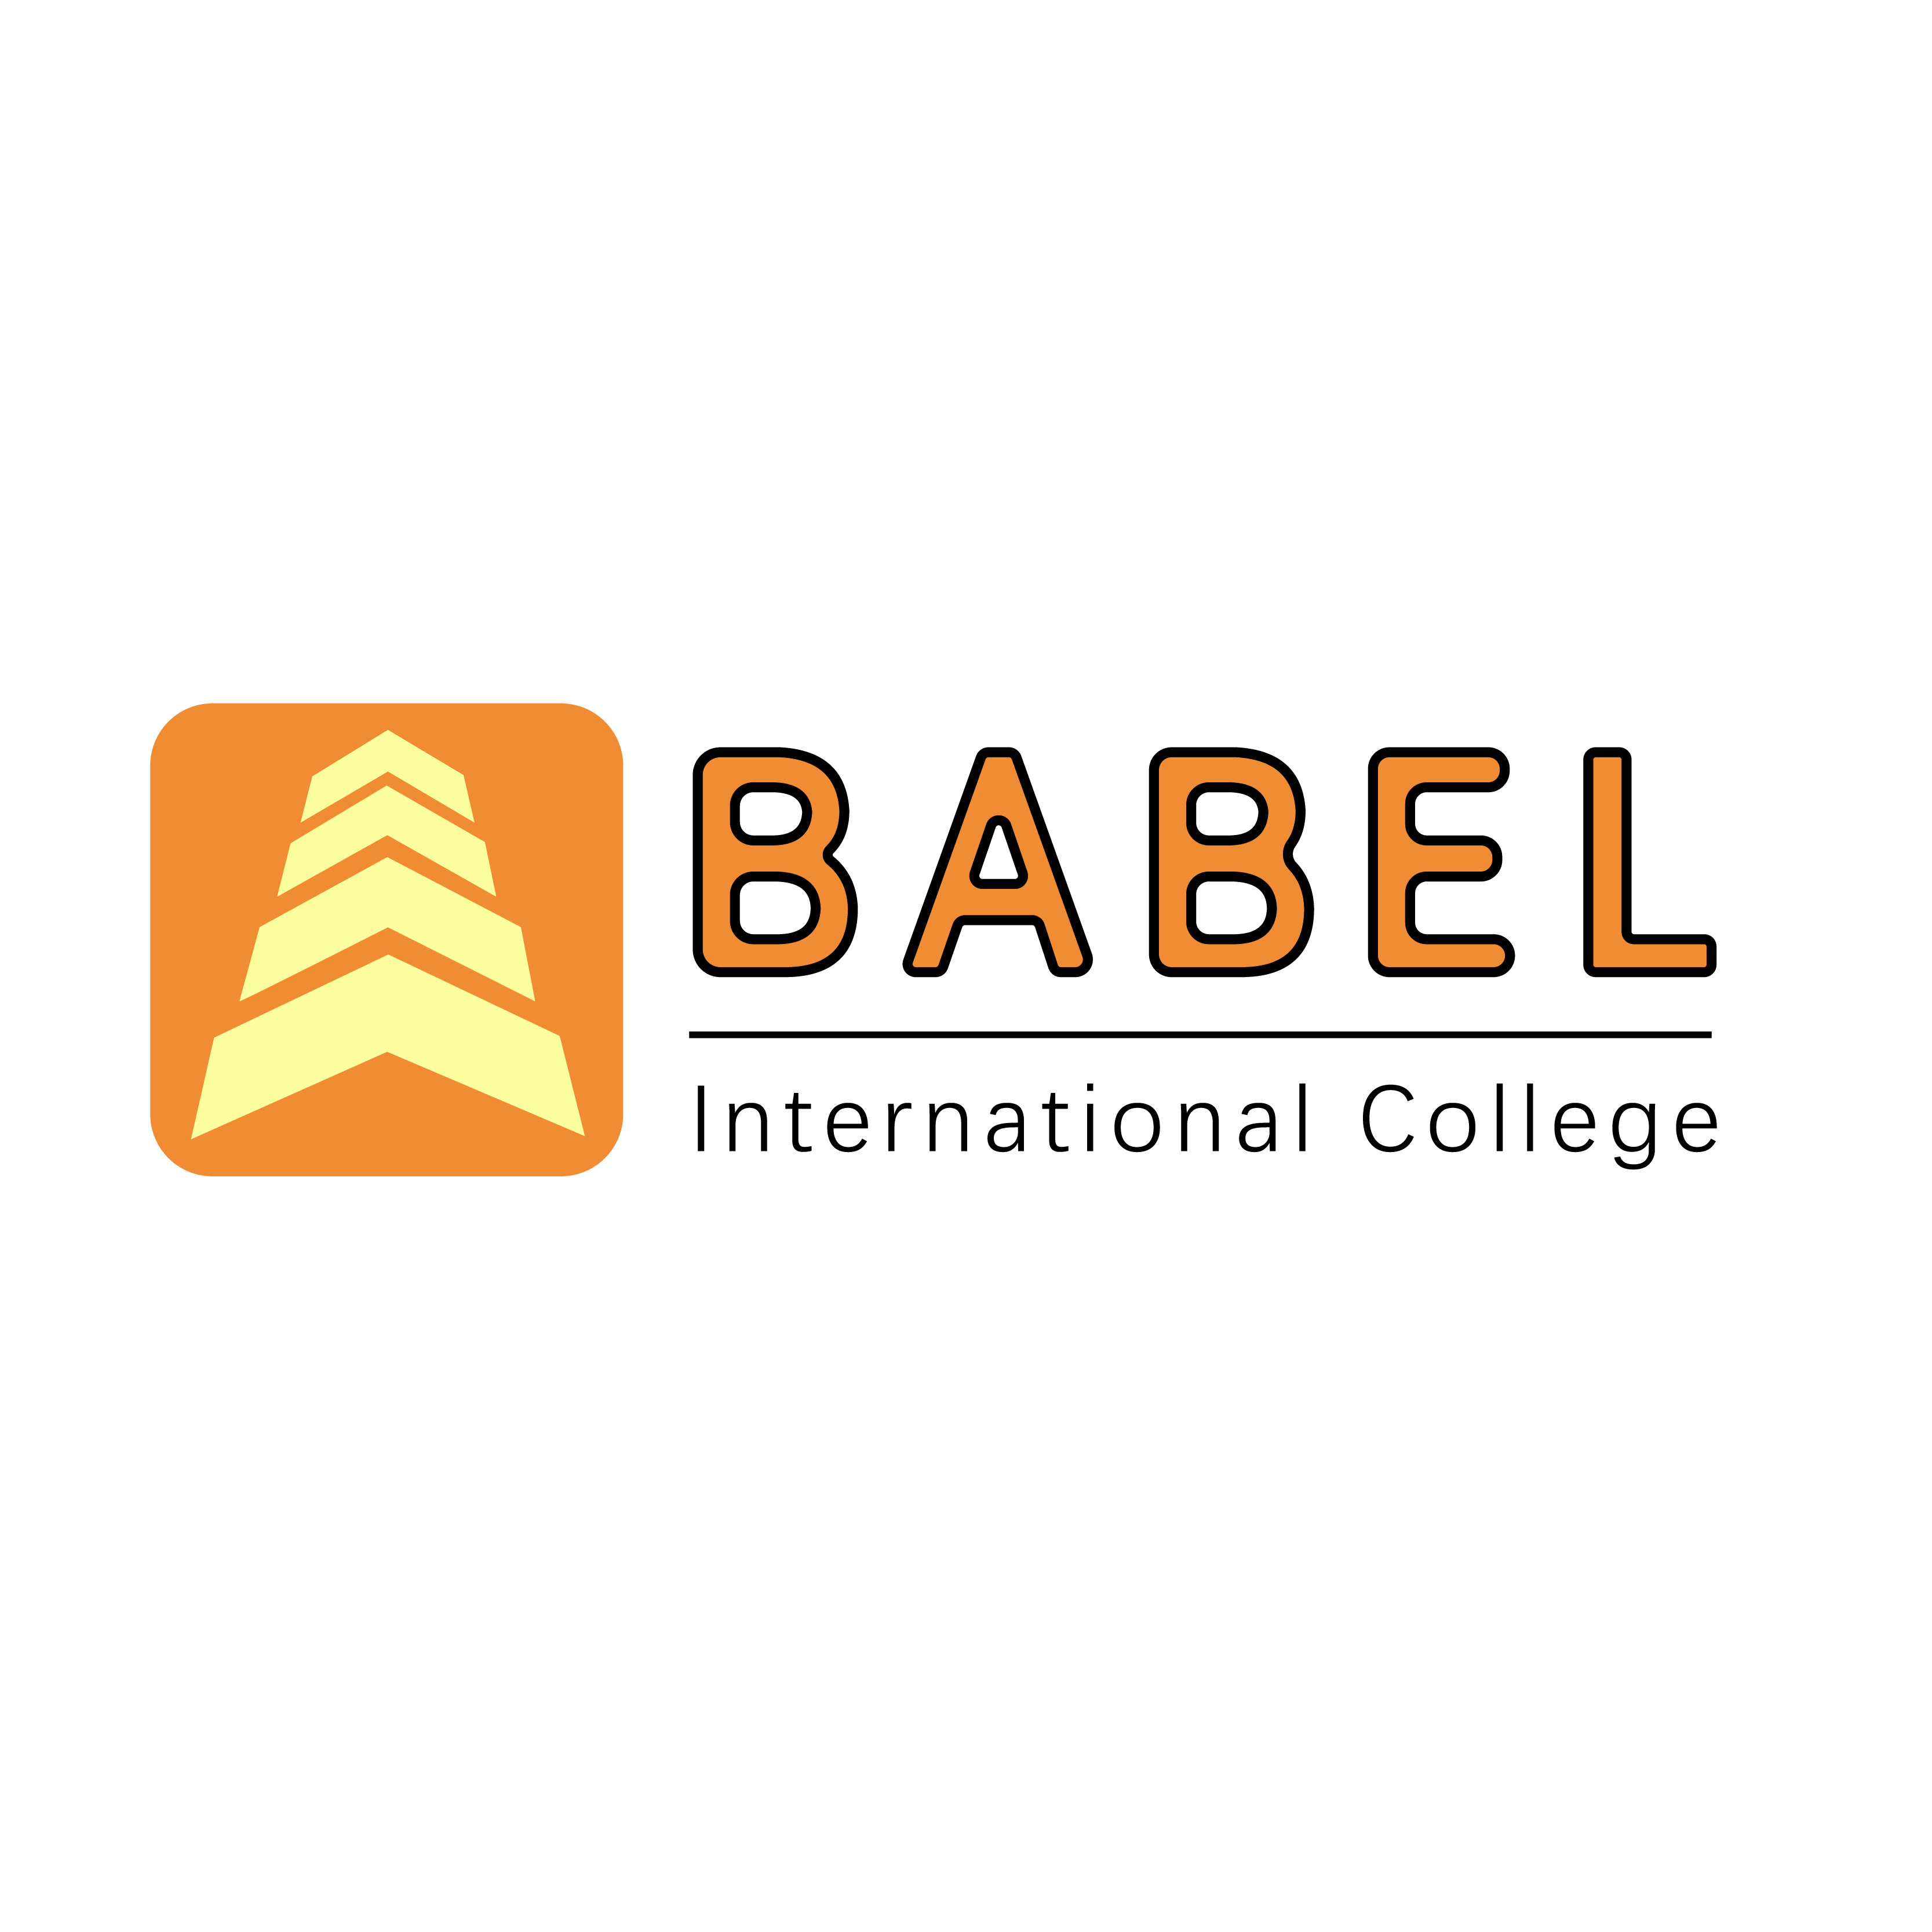 Babel International College